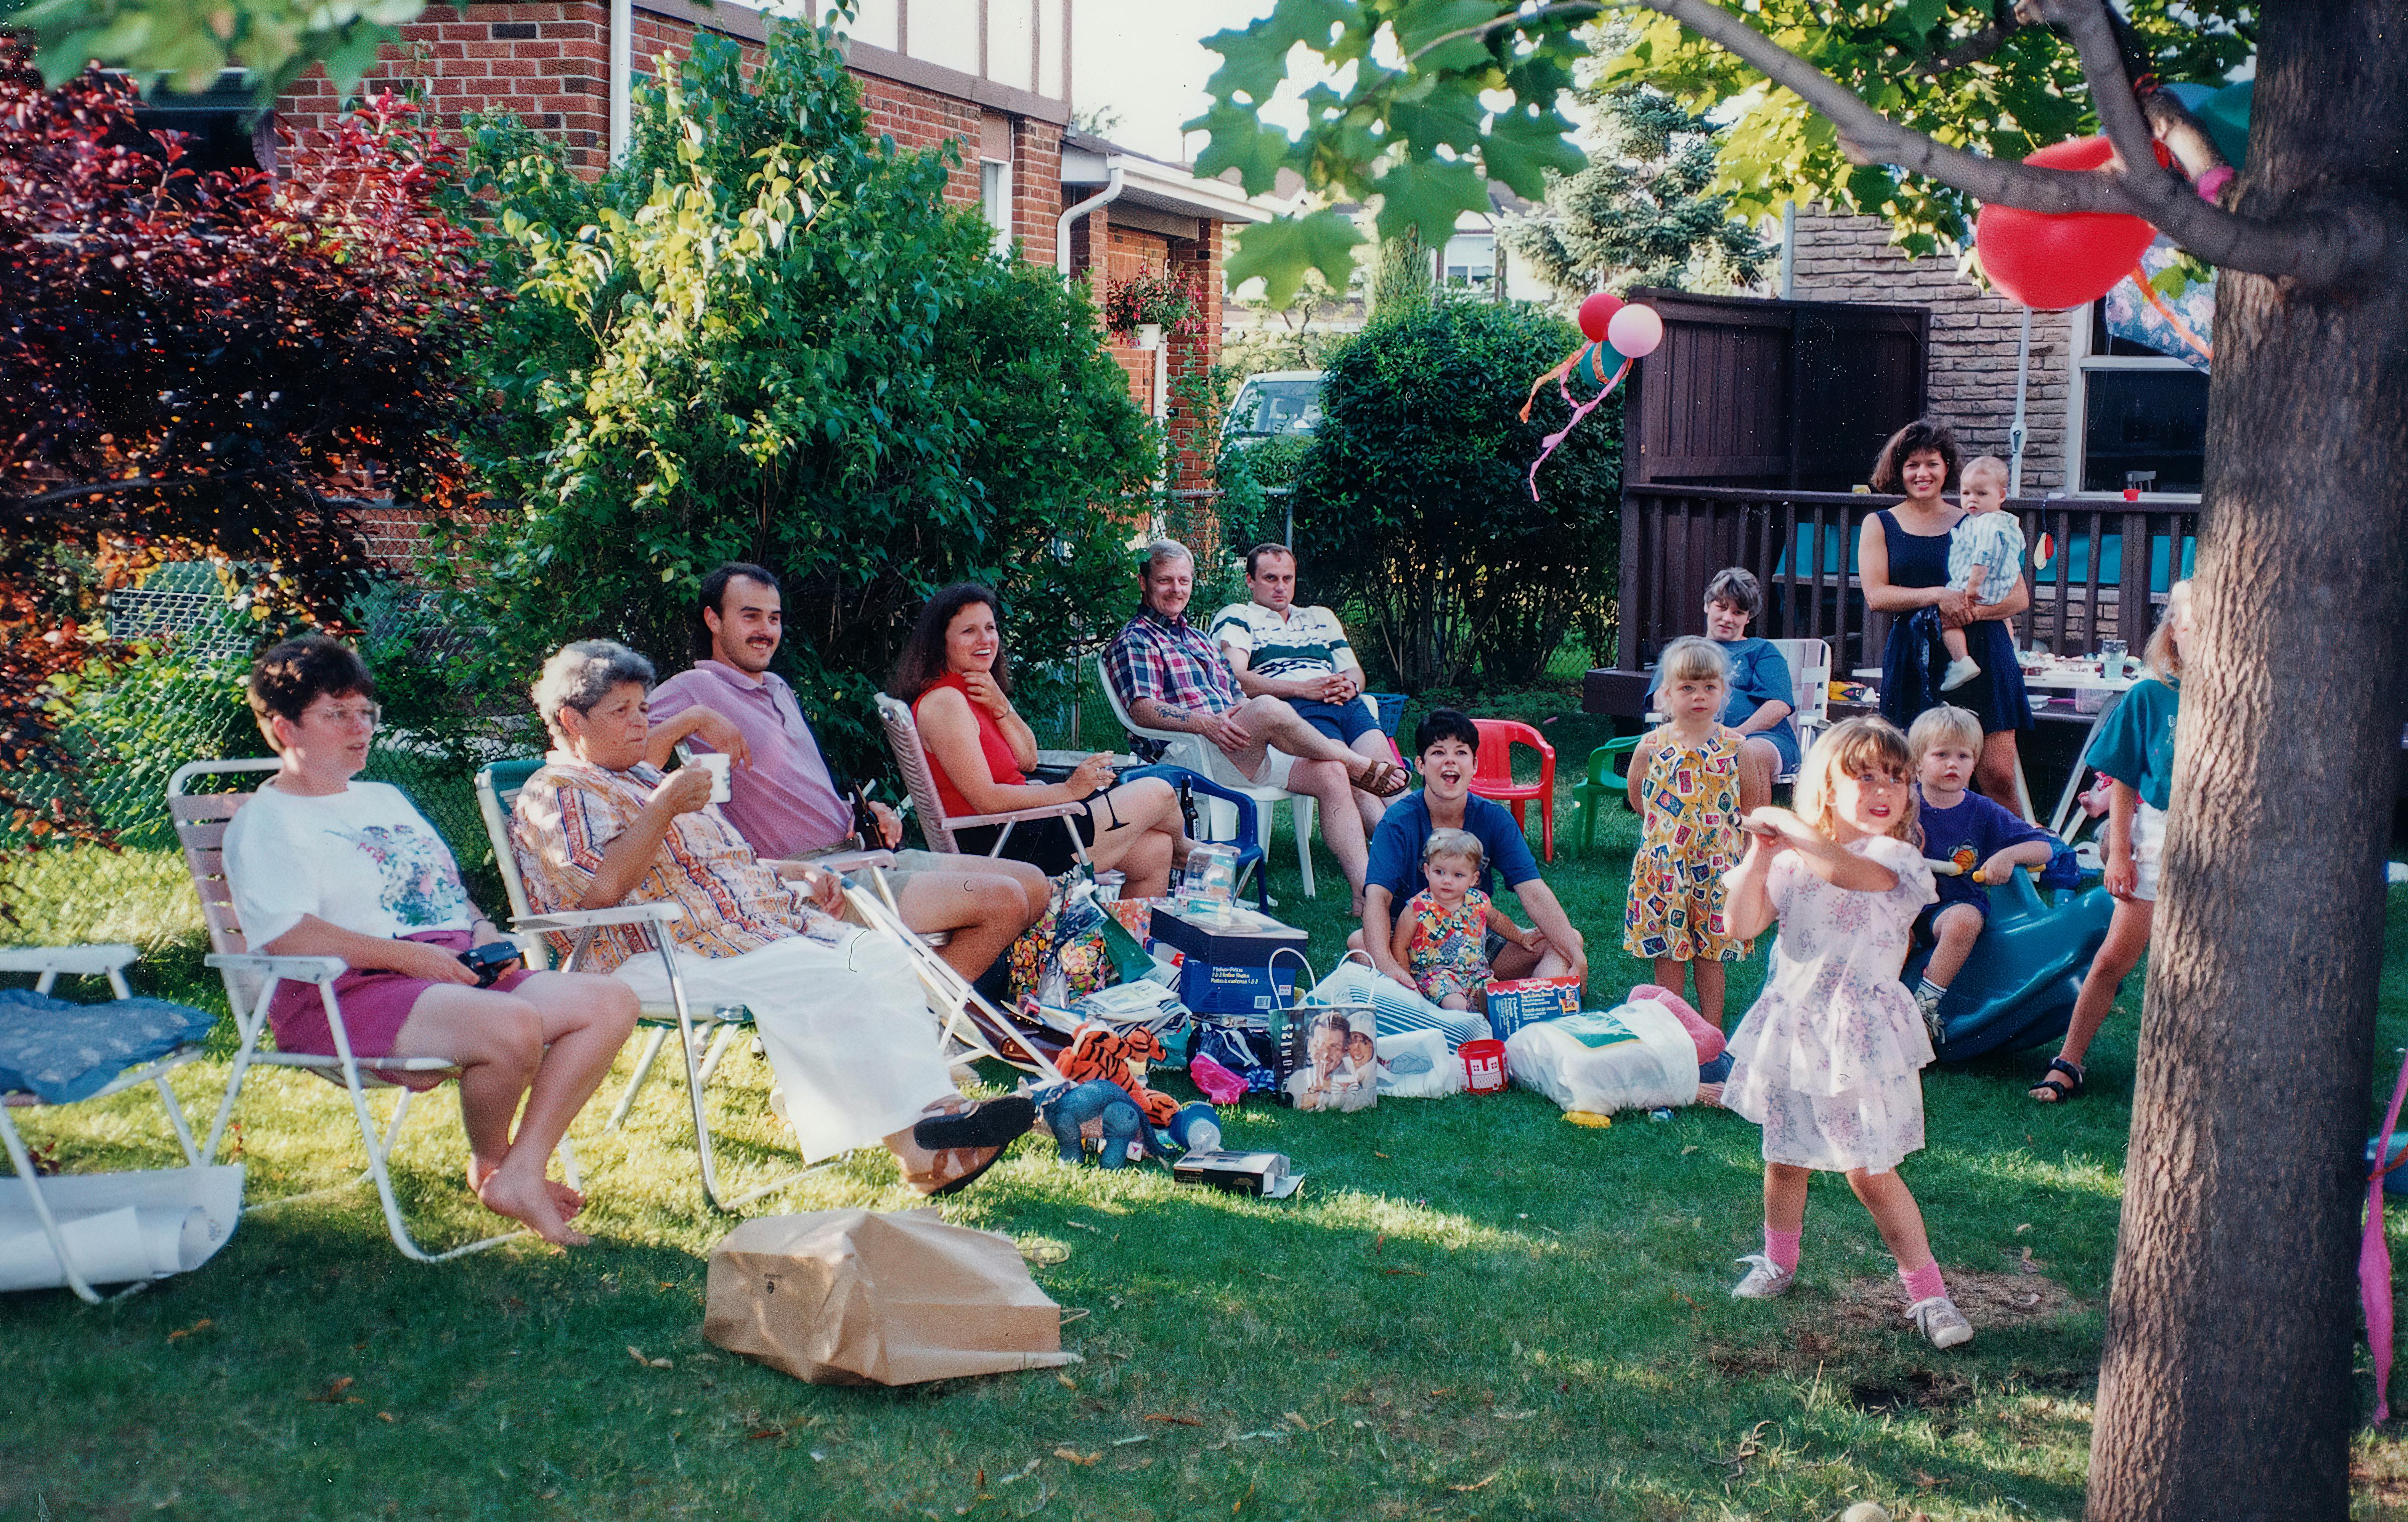 A backyard party | Source: Pexels